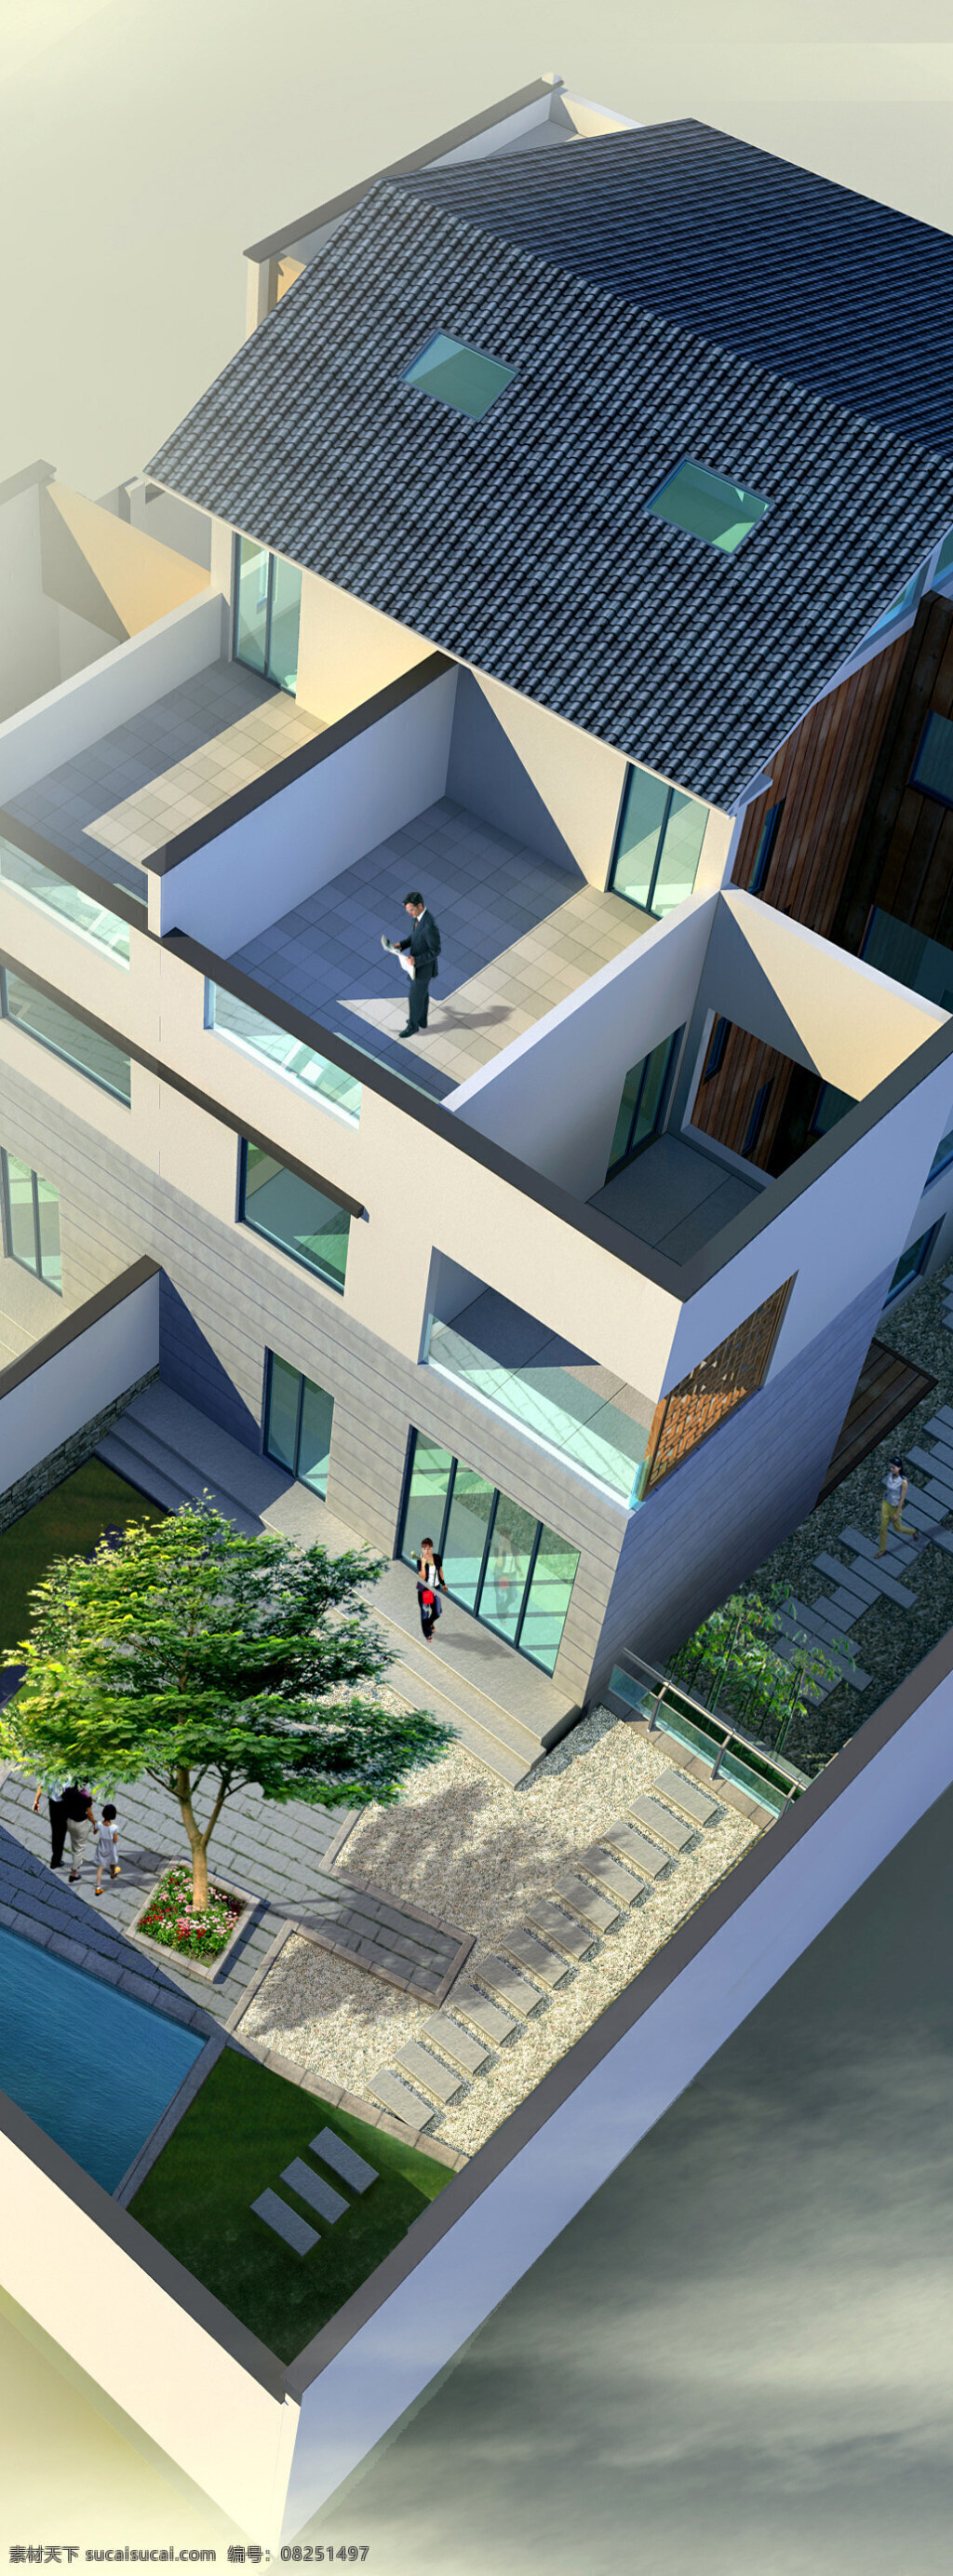 3d 中式 建筑模型 模板下载 建筑 俯视图 中式建筑模型 中式建筑模板 室外 模型 设计素材 max 灰色